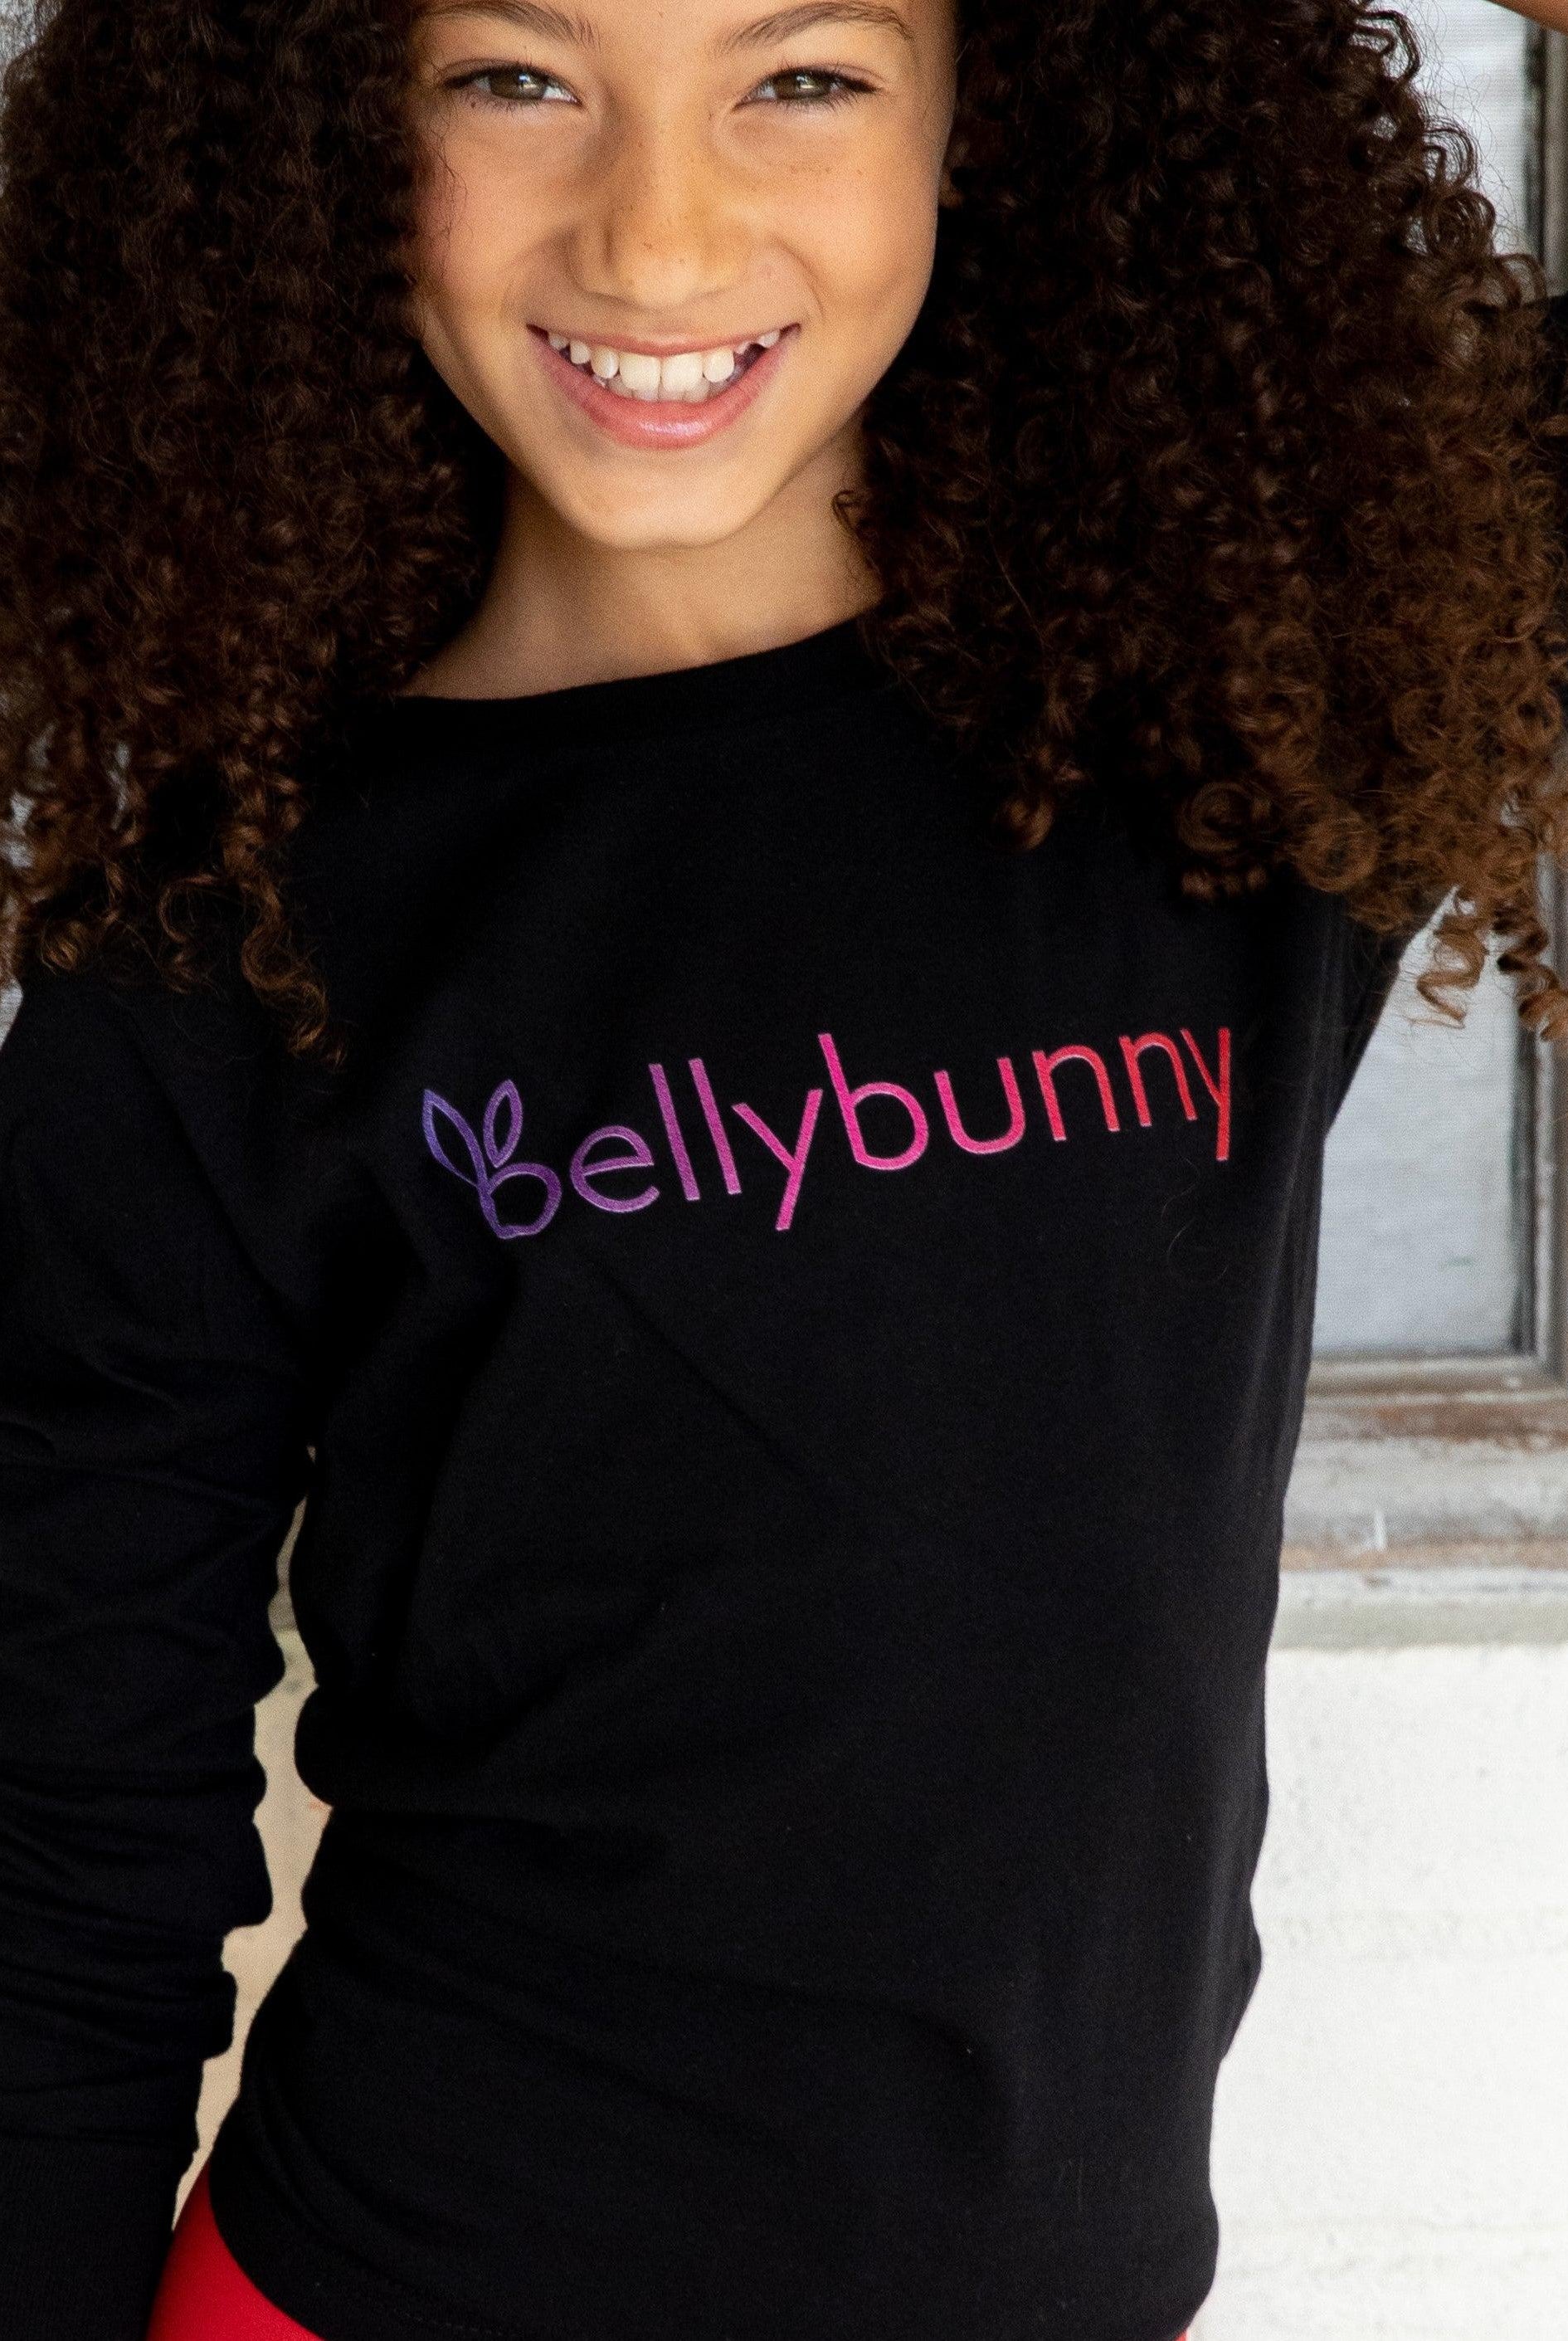 Bellybunny-Youth Long Sleeve T-Shirt-black with rainbow logo